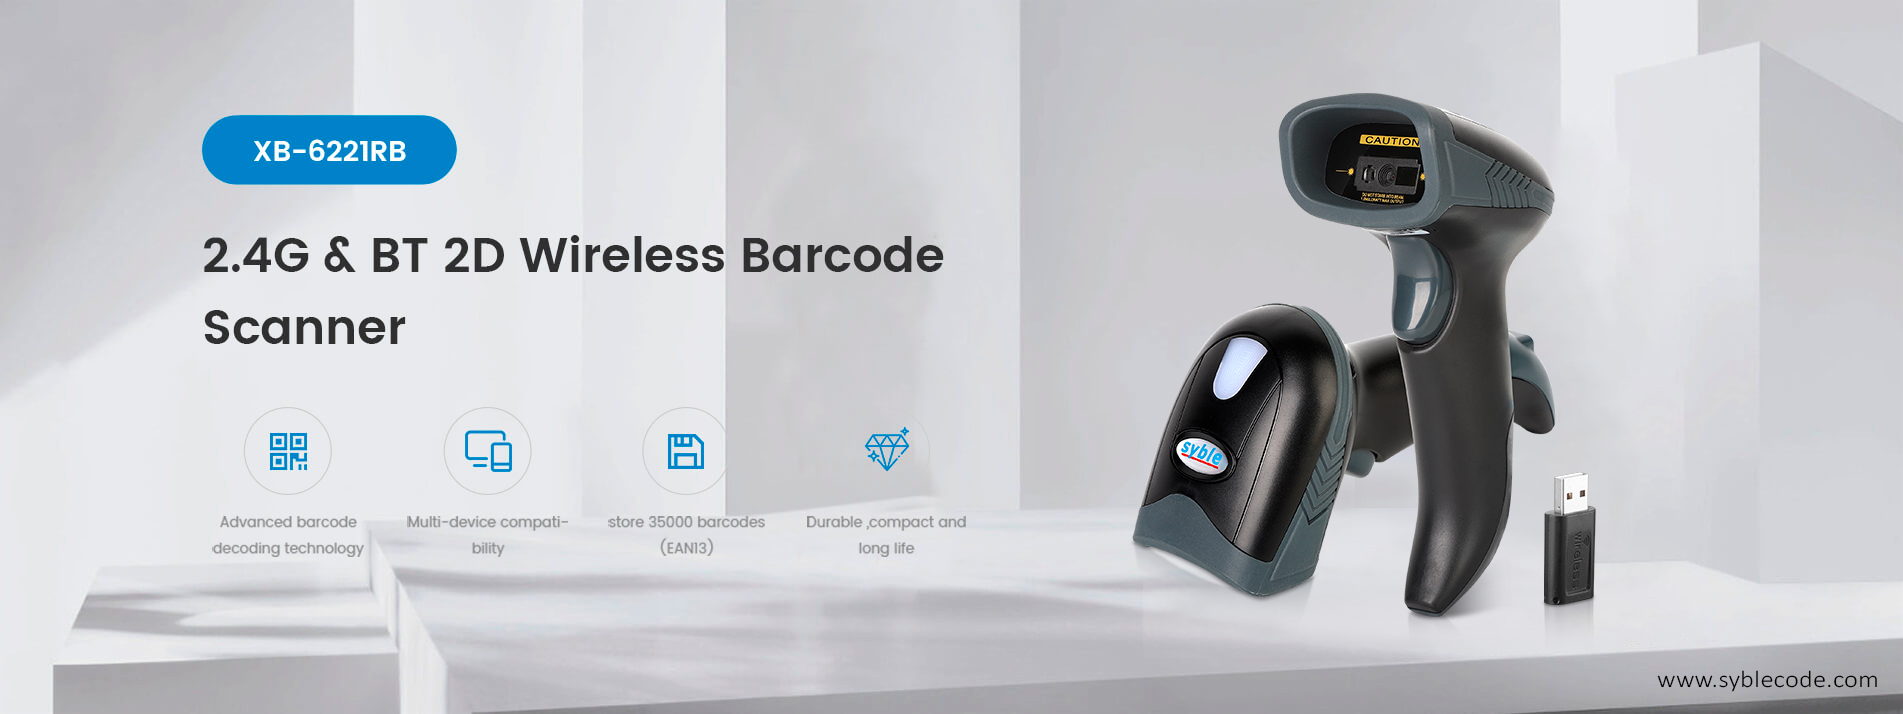 2.4G and BT 2D Wireless Barcode Scanner